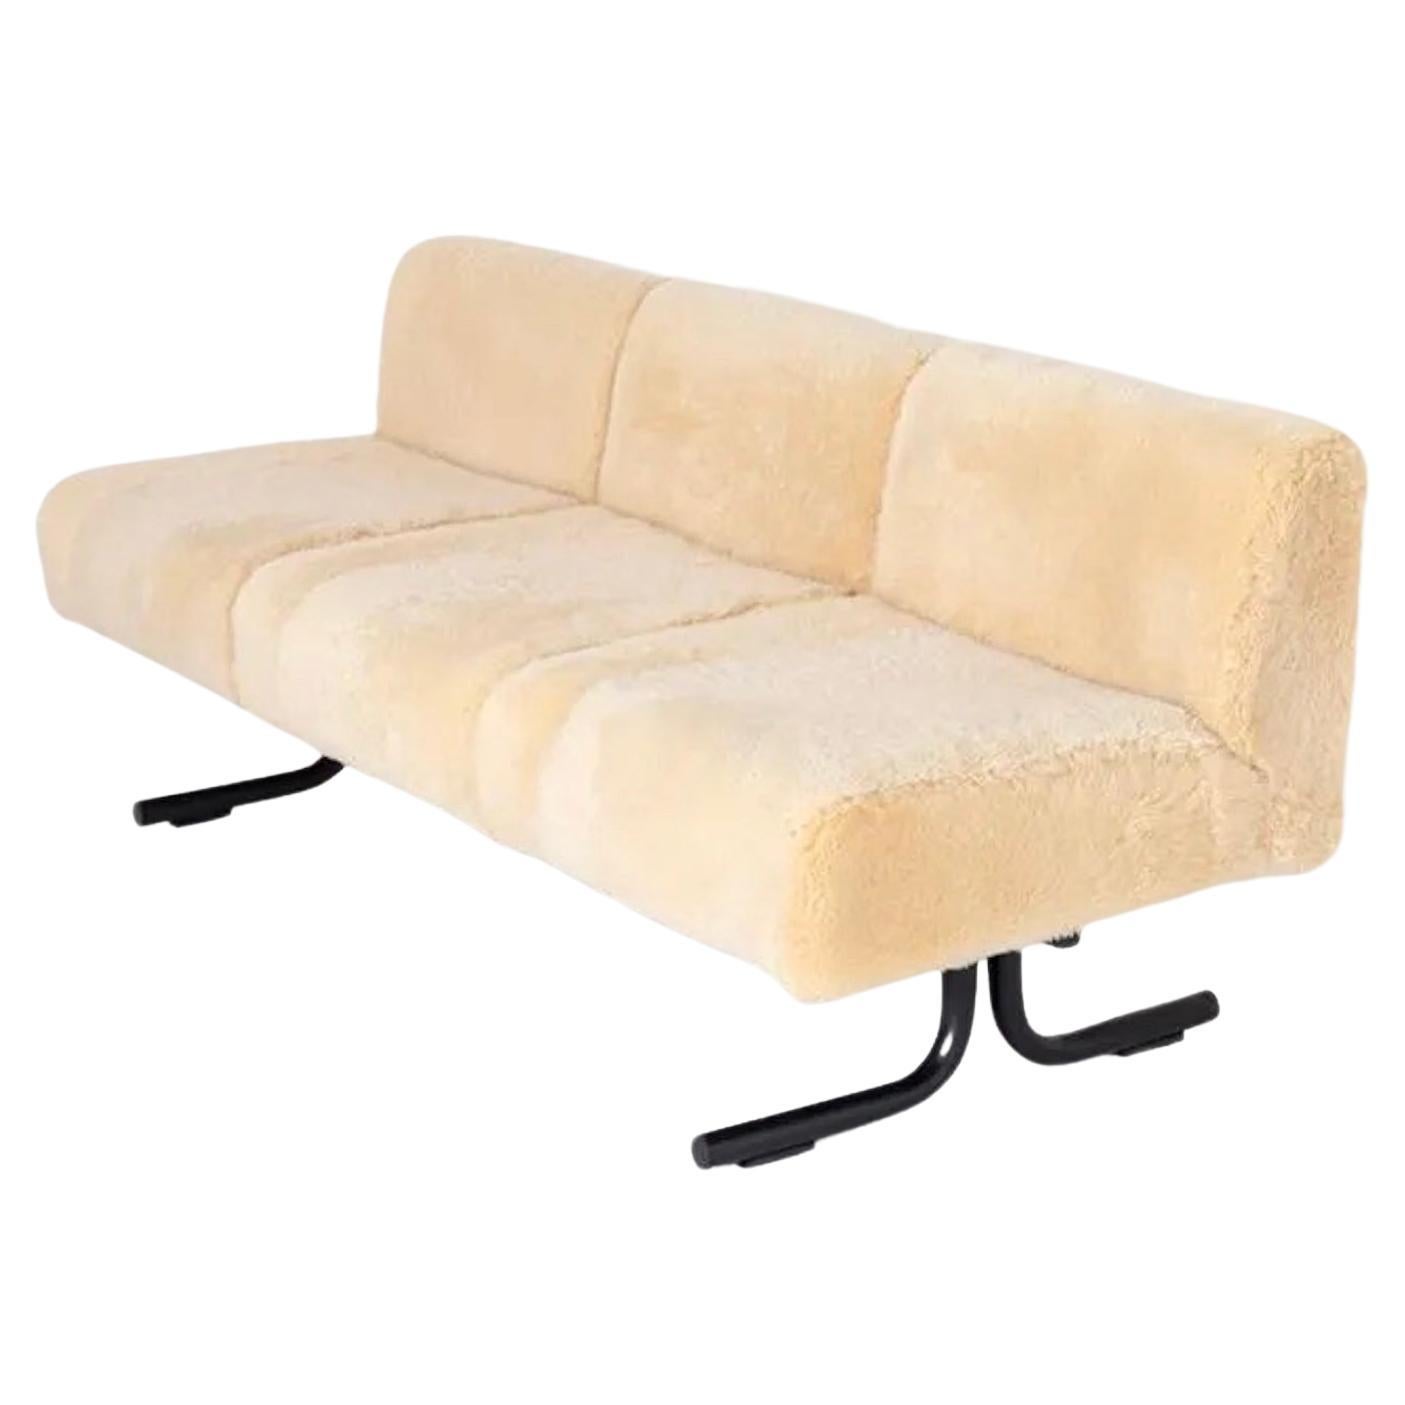 Two-Seater Sheepskin Sofa by Osvaldo Borsani for Tecno